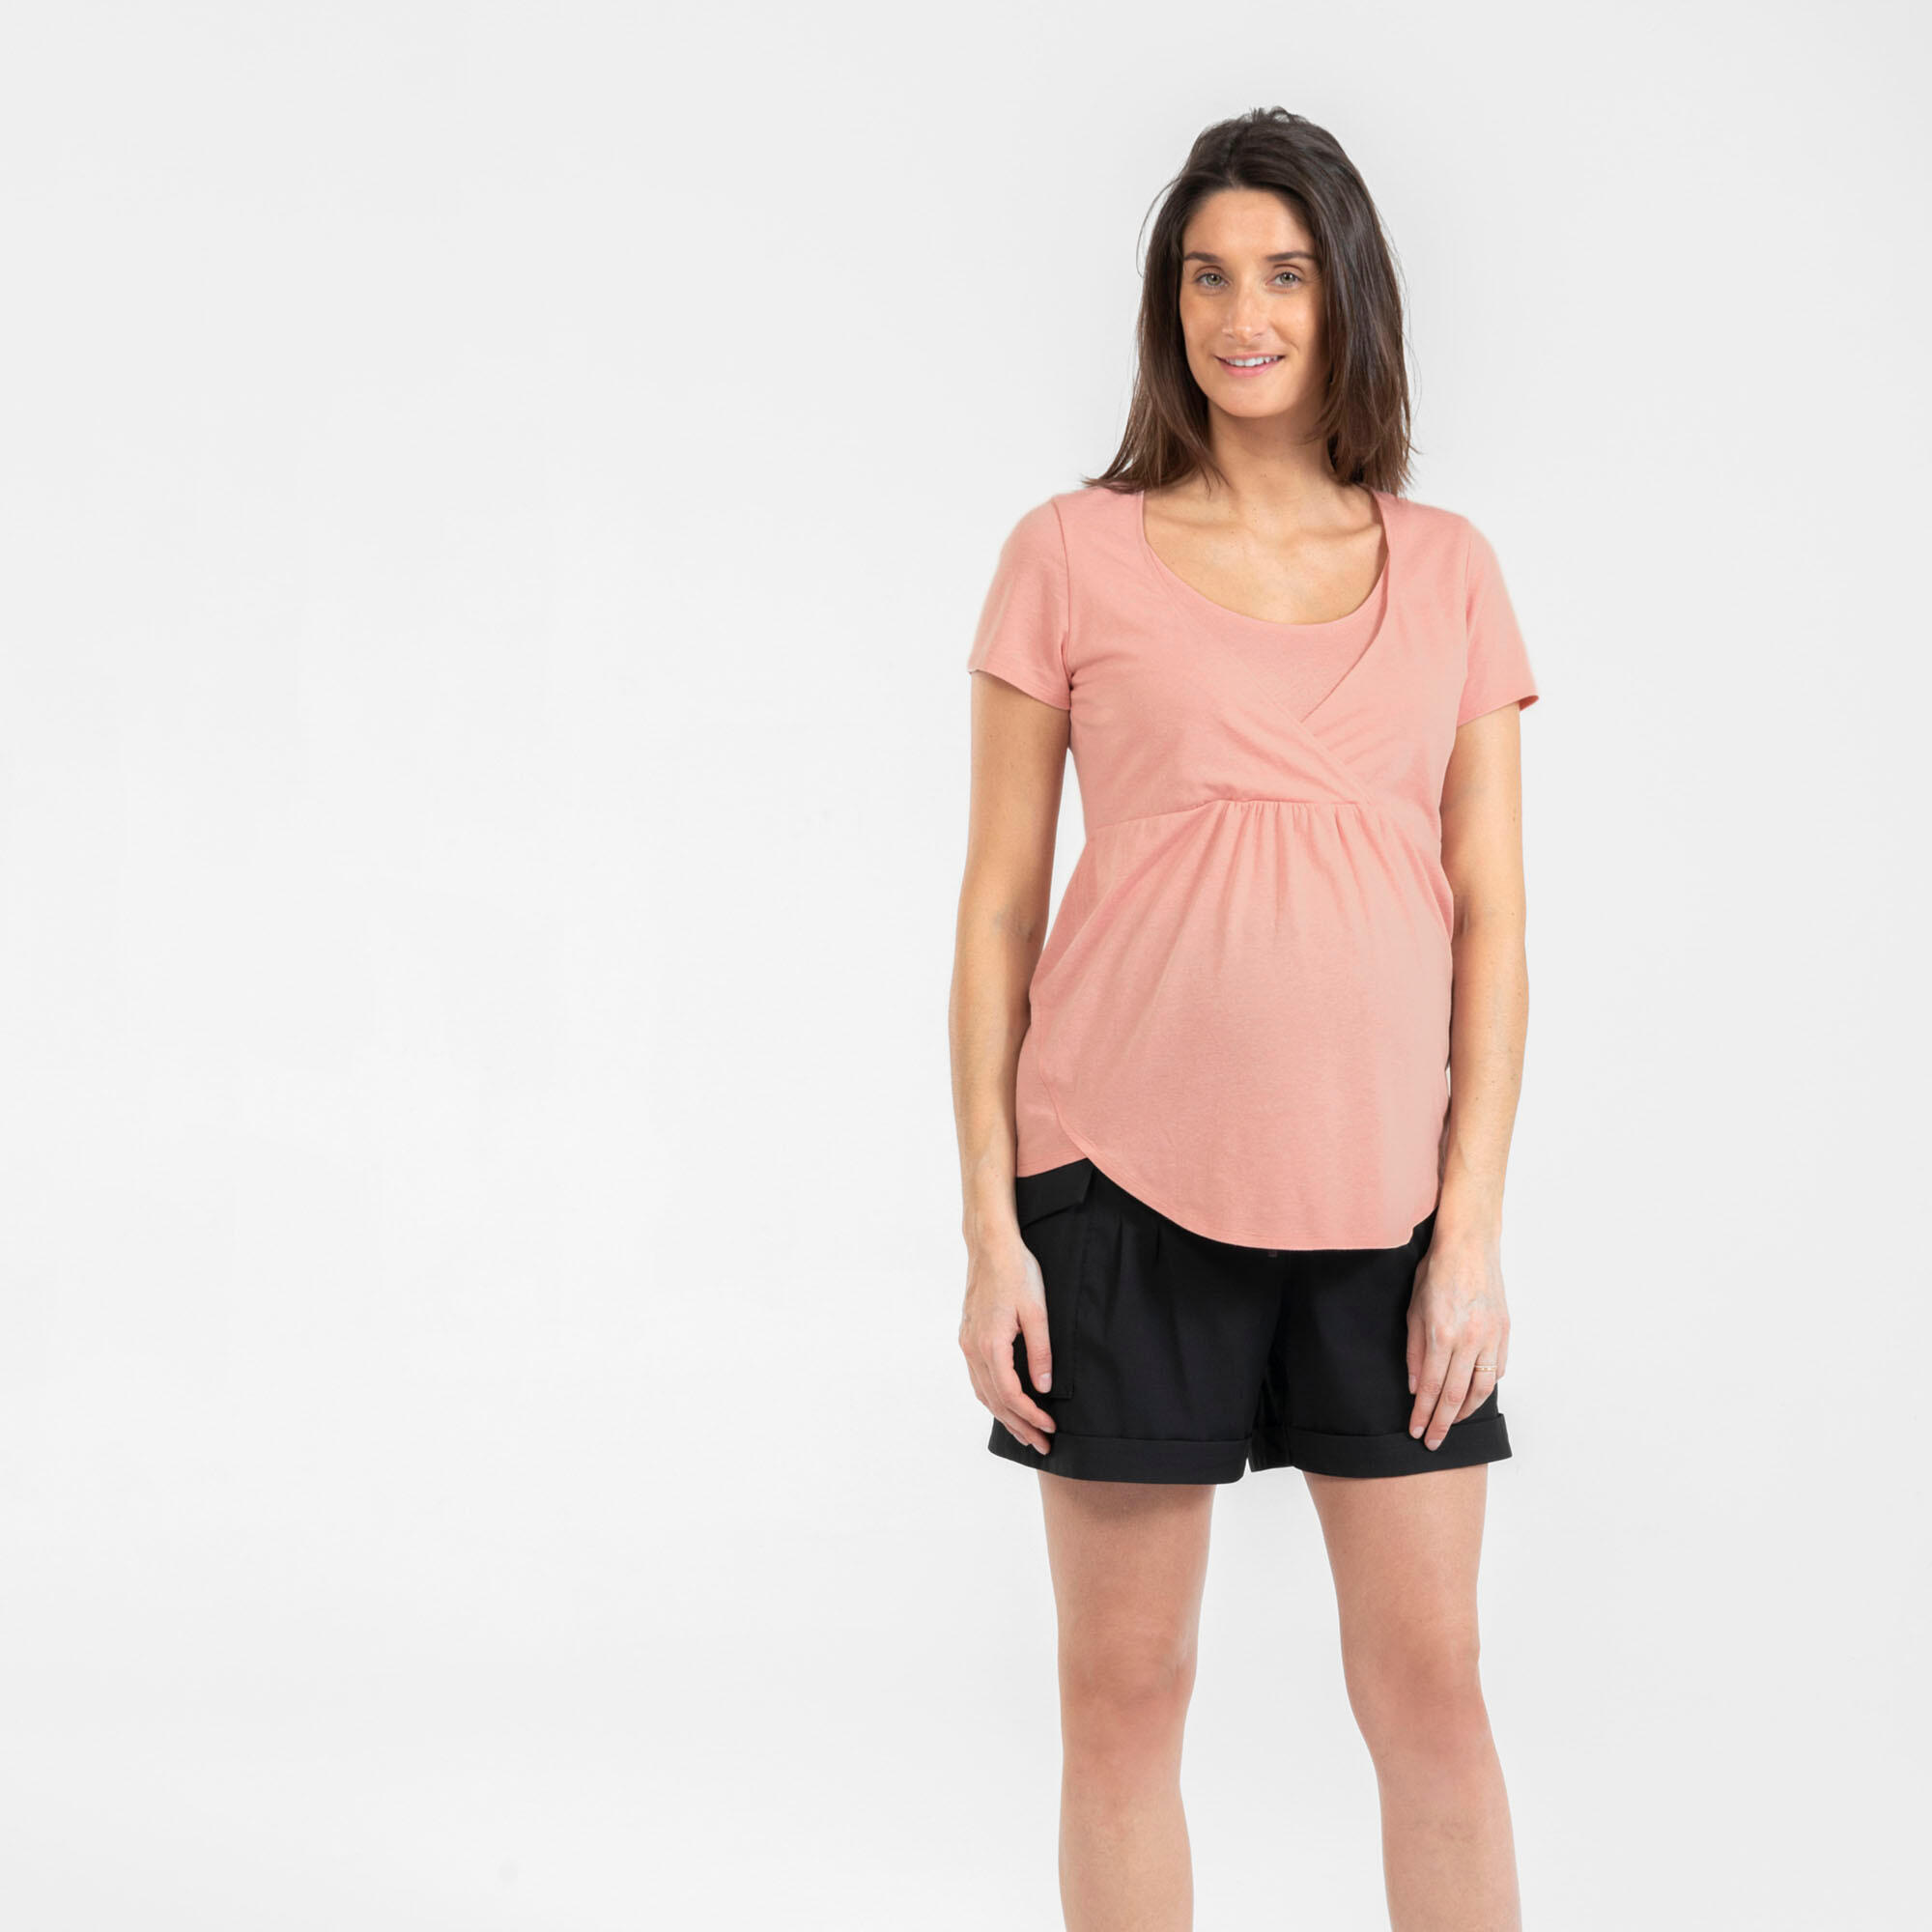 Women’s Maternity Hiking T-shirt Pregnant Women 4/8